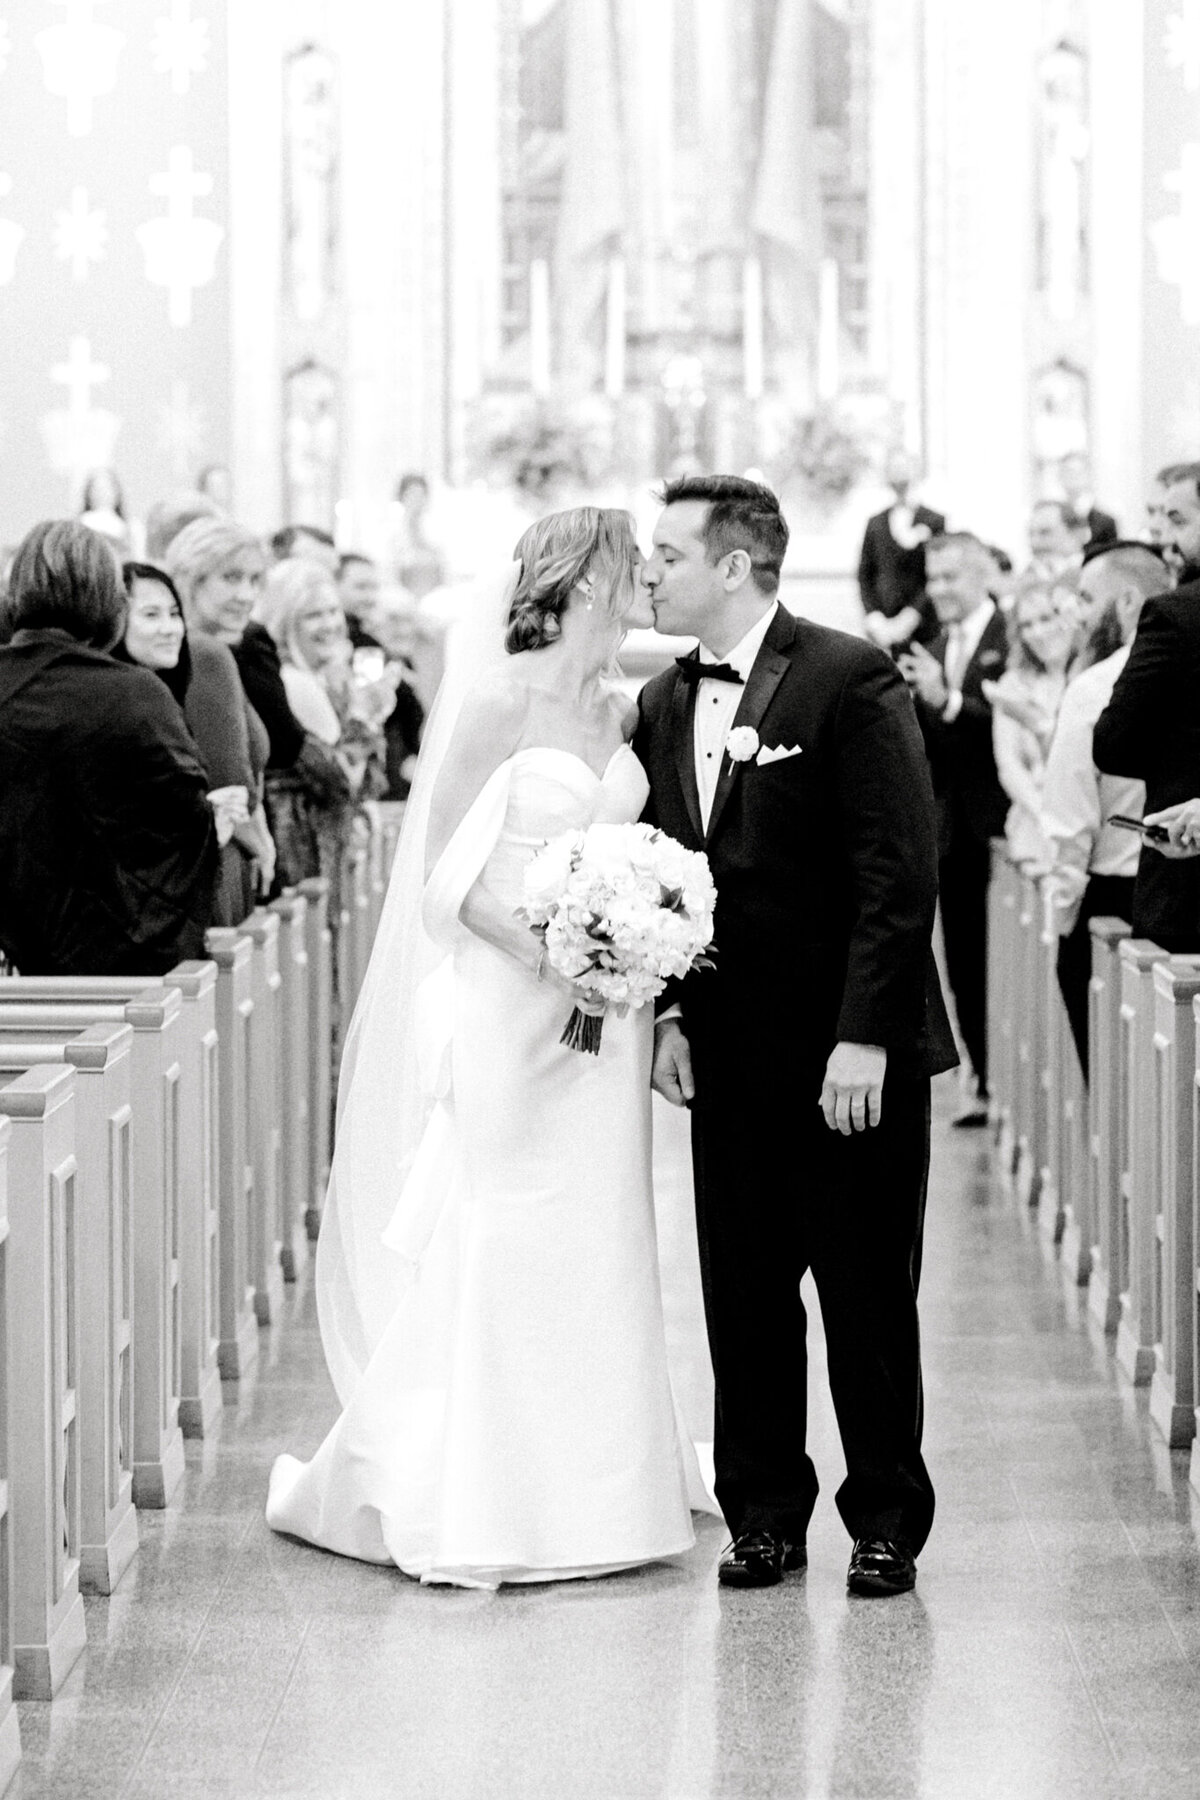 Virginia & Michael's Wedding at the Adolphus Hotel | Dallas Wedding Photographer | Sami Kathryn Photography-108